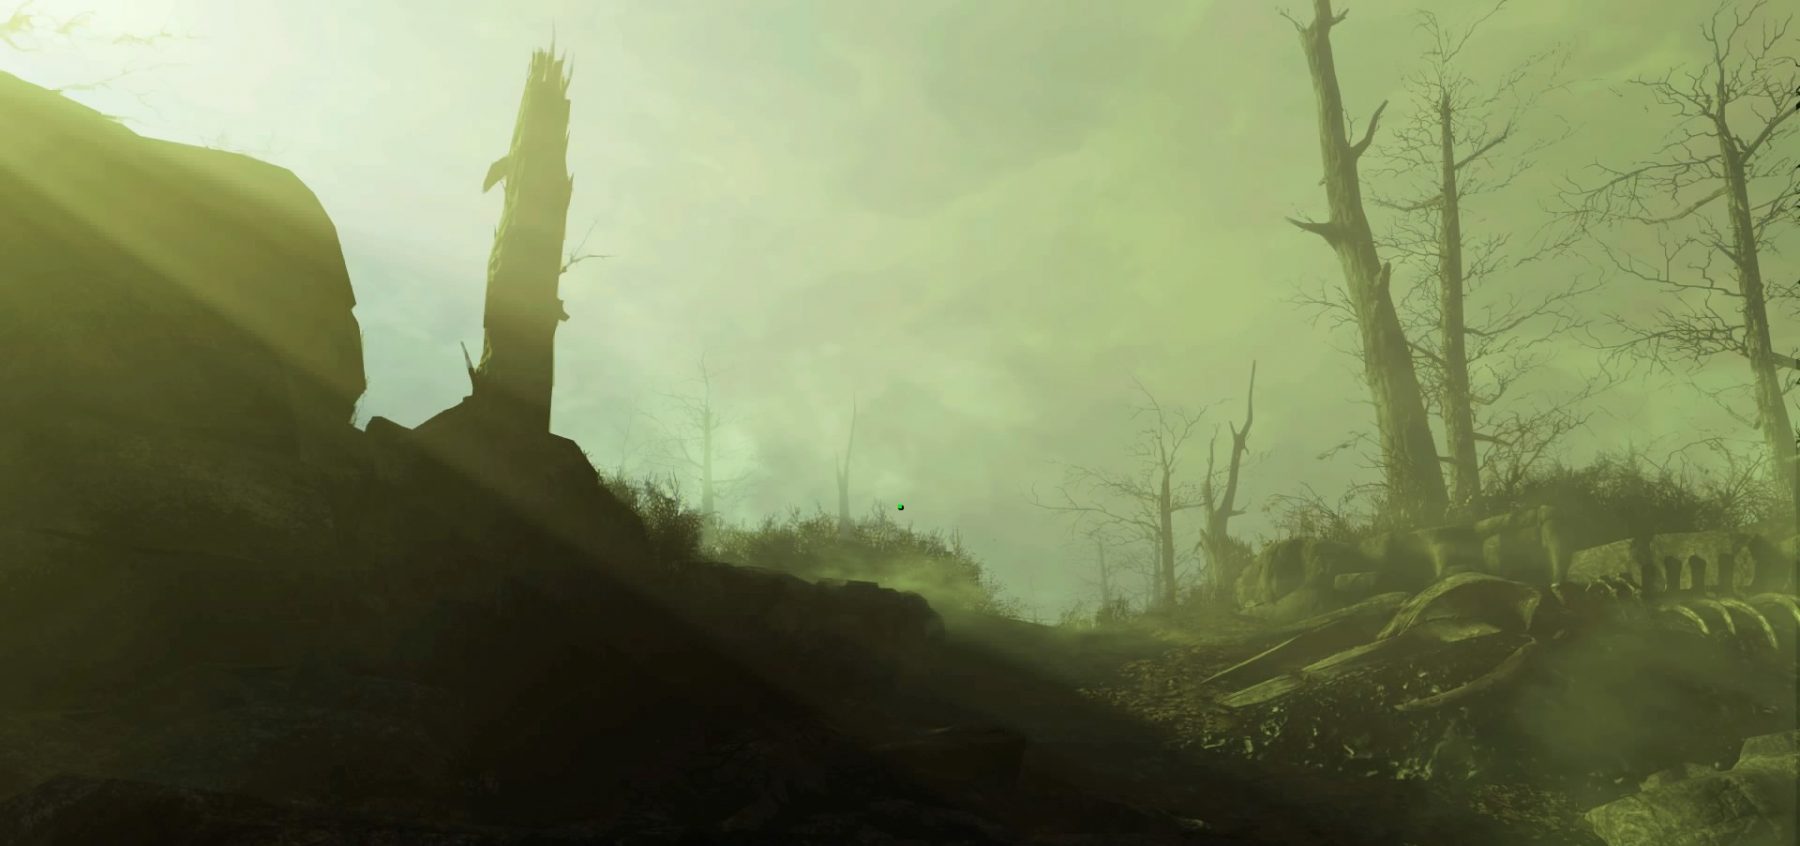 Fallout 4's natural world